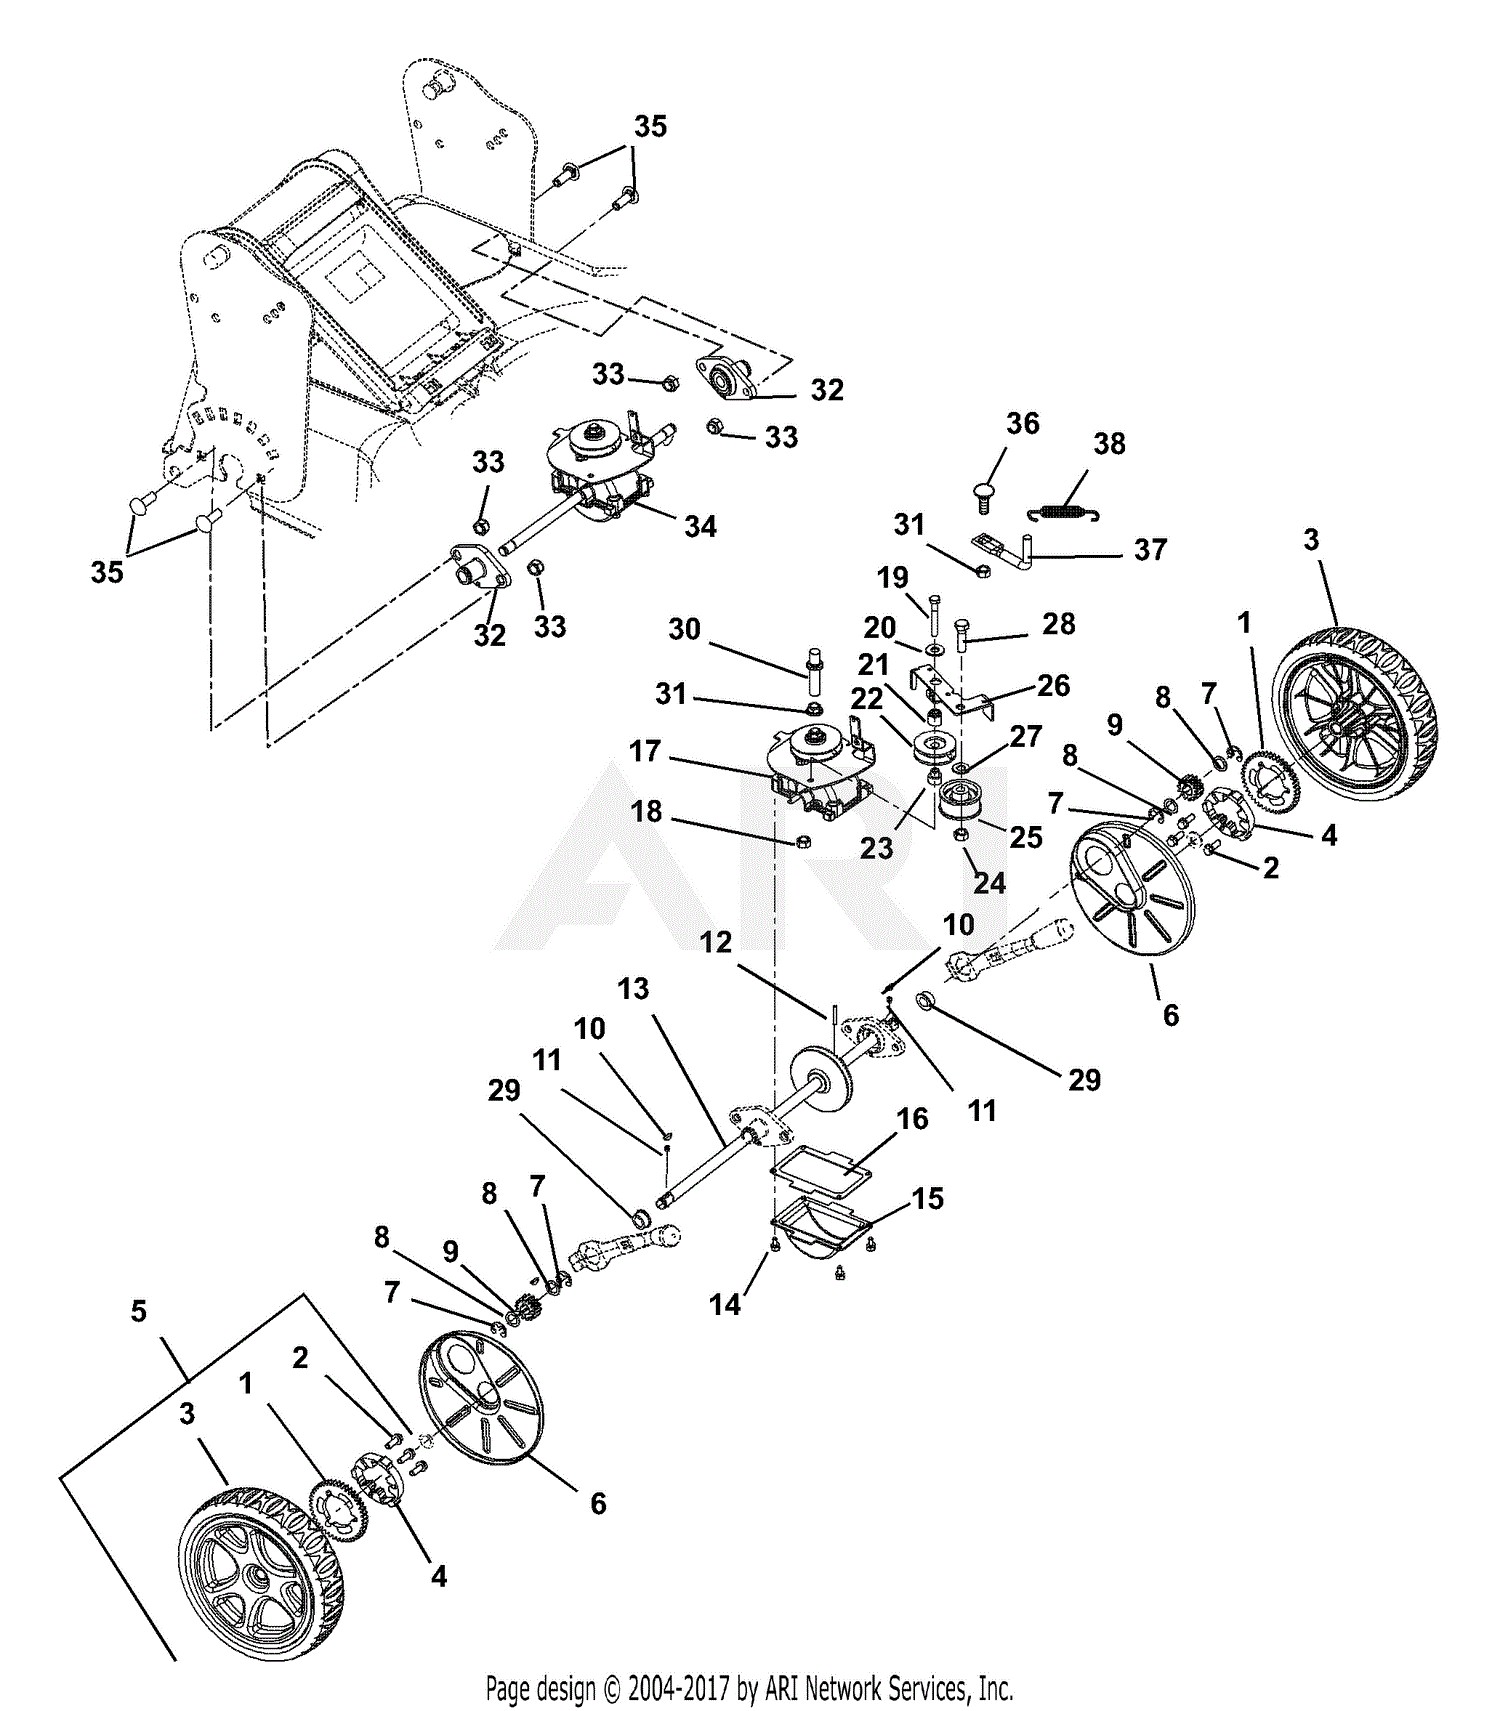 Craftsman Tractor Parts Diagram Gravely Ssp21 6 5hp B&s Self Propelled Of Craftsman Tractor Parts Diagram